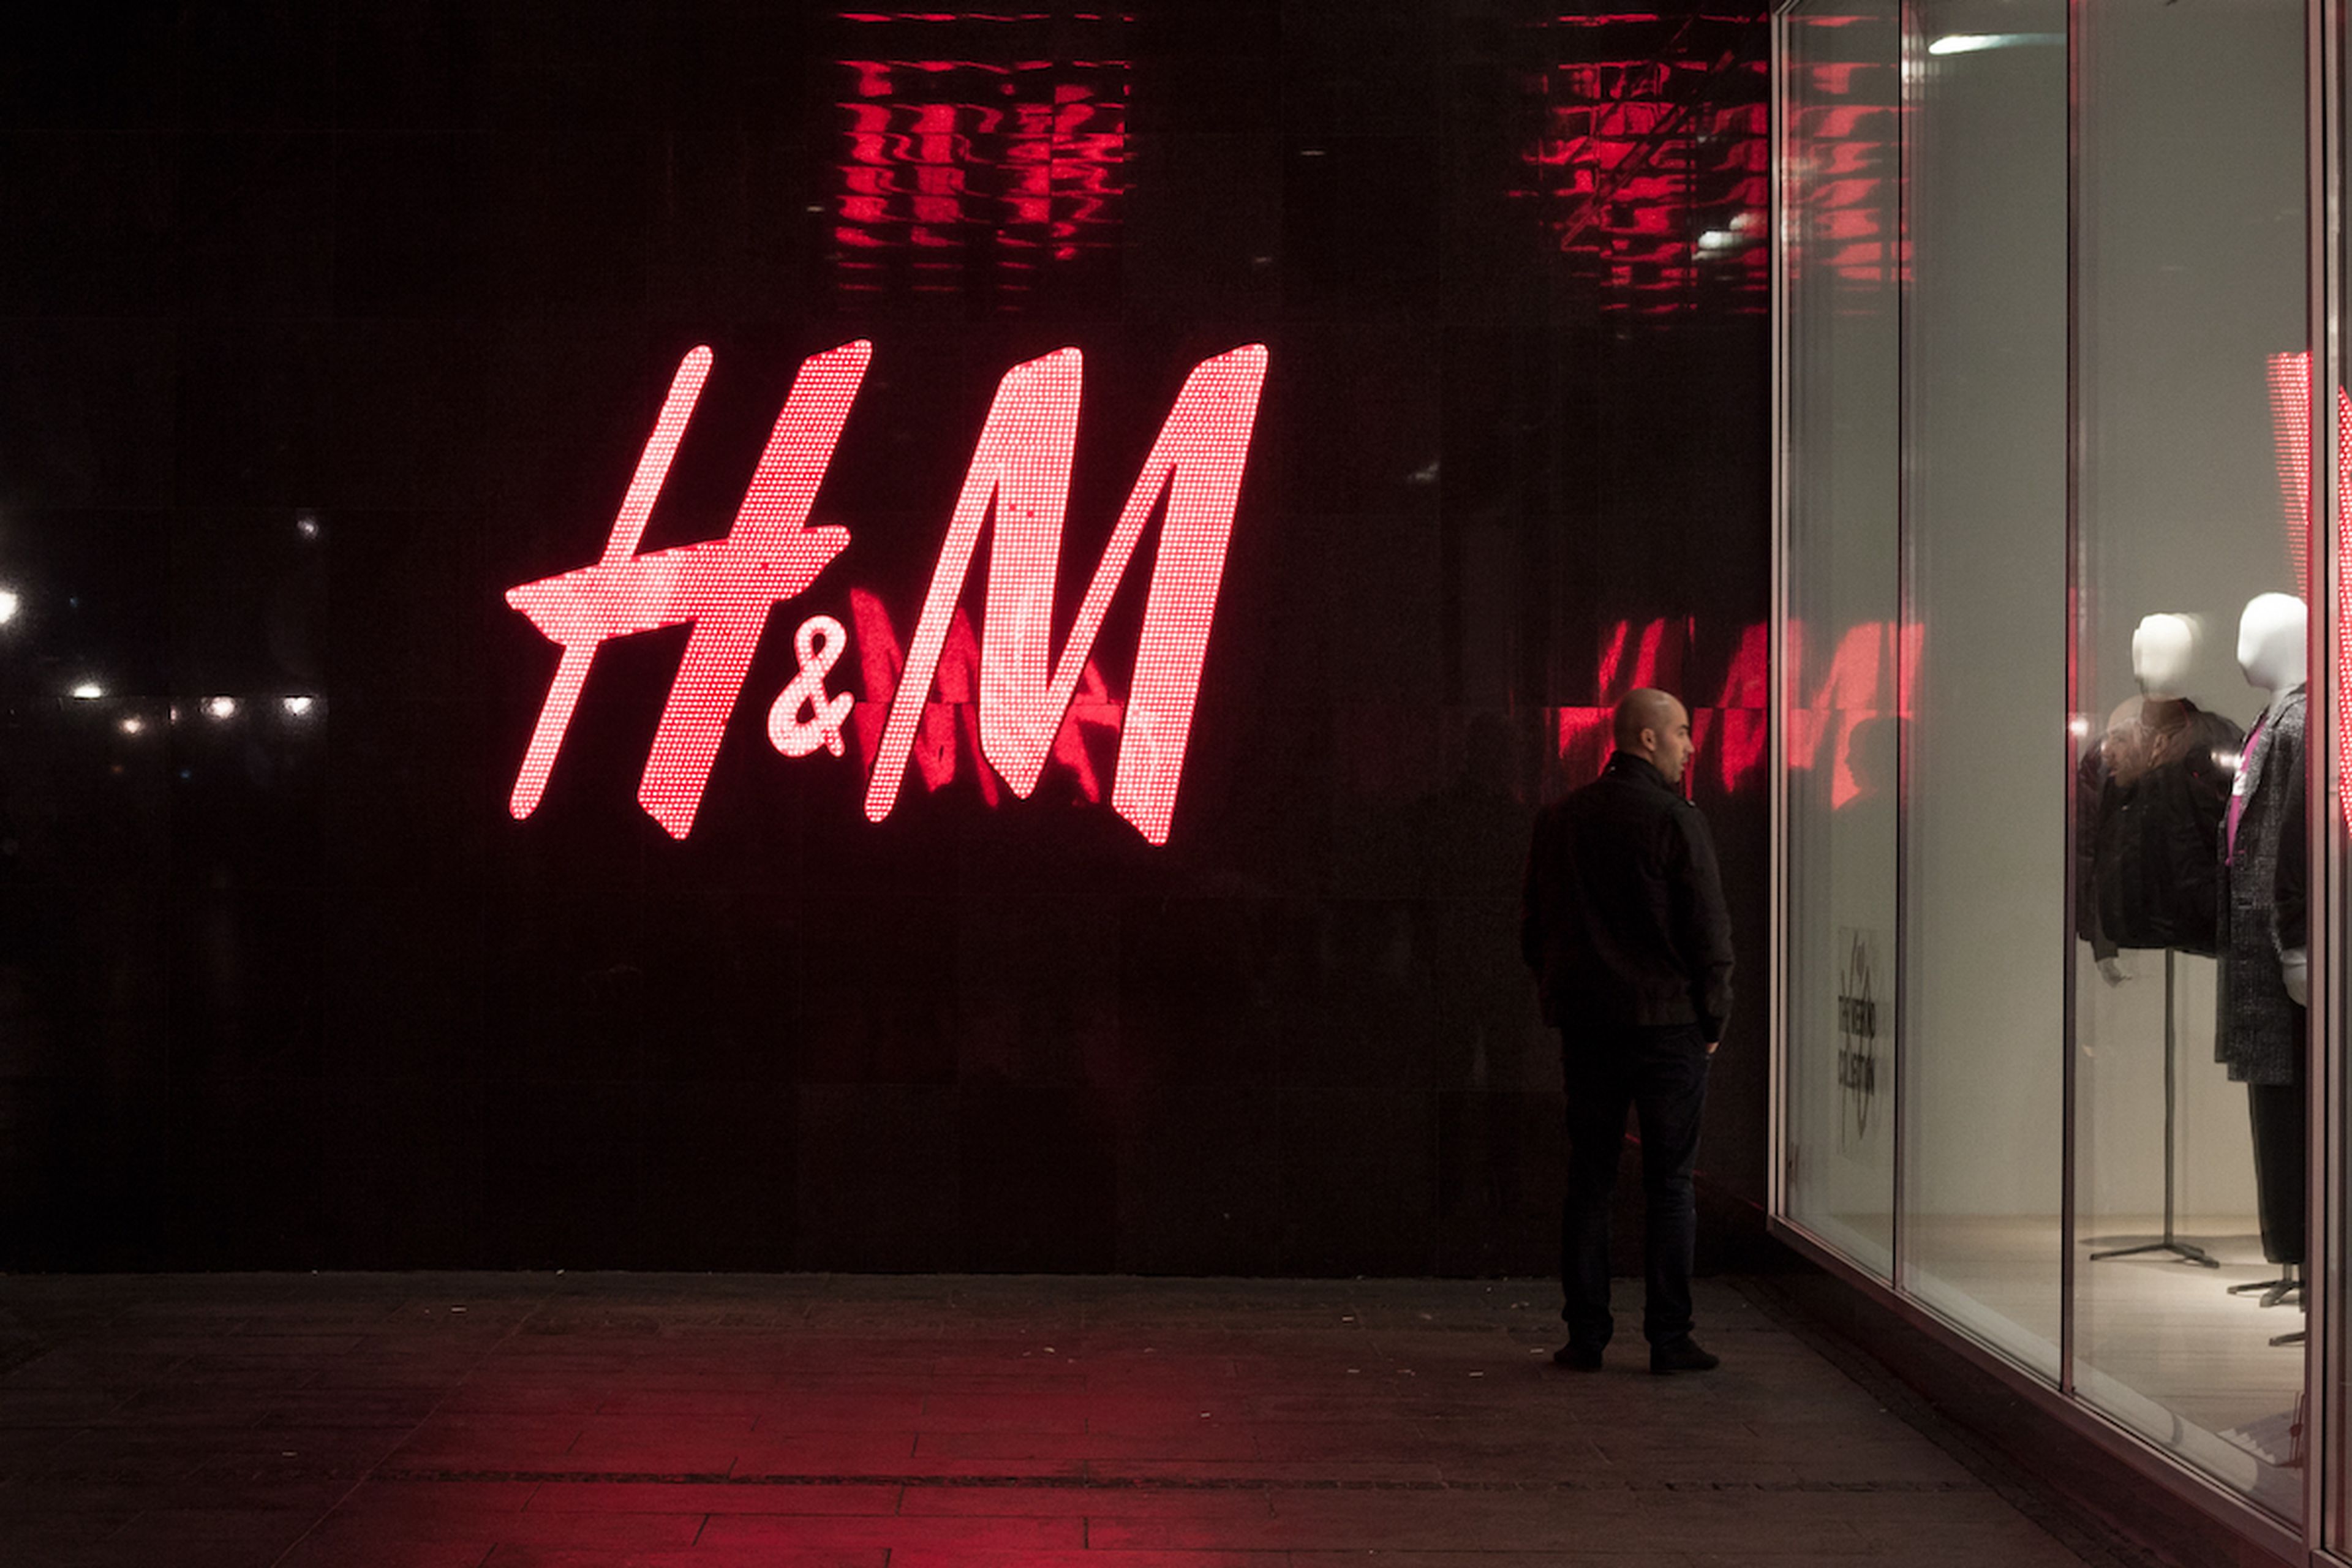 Tienda H&M